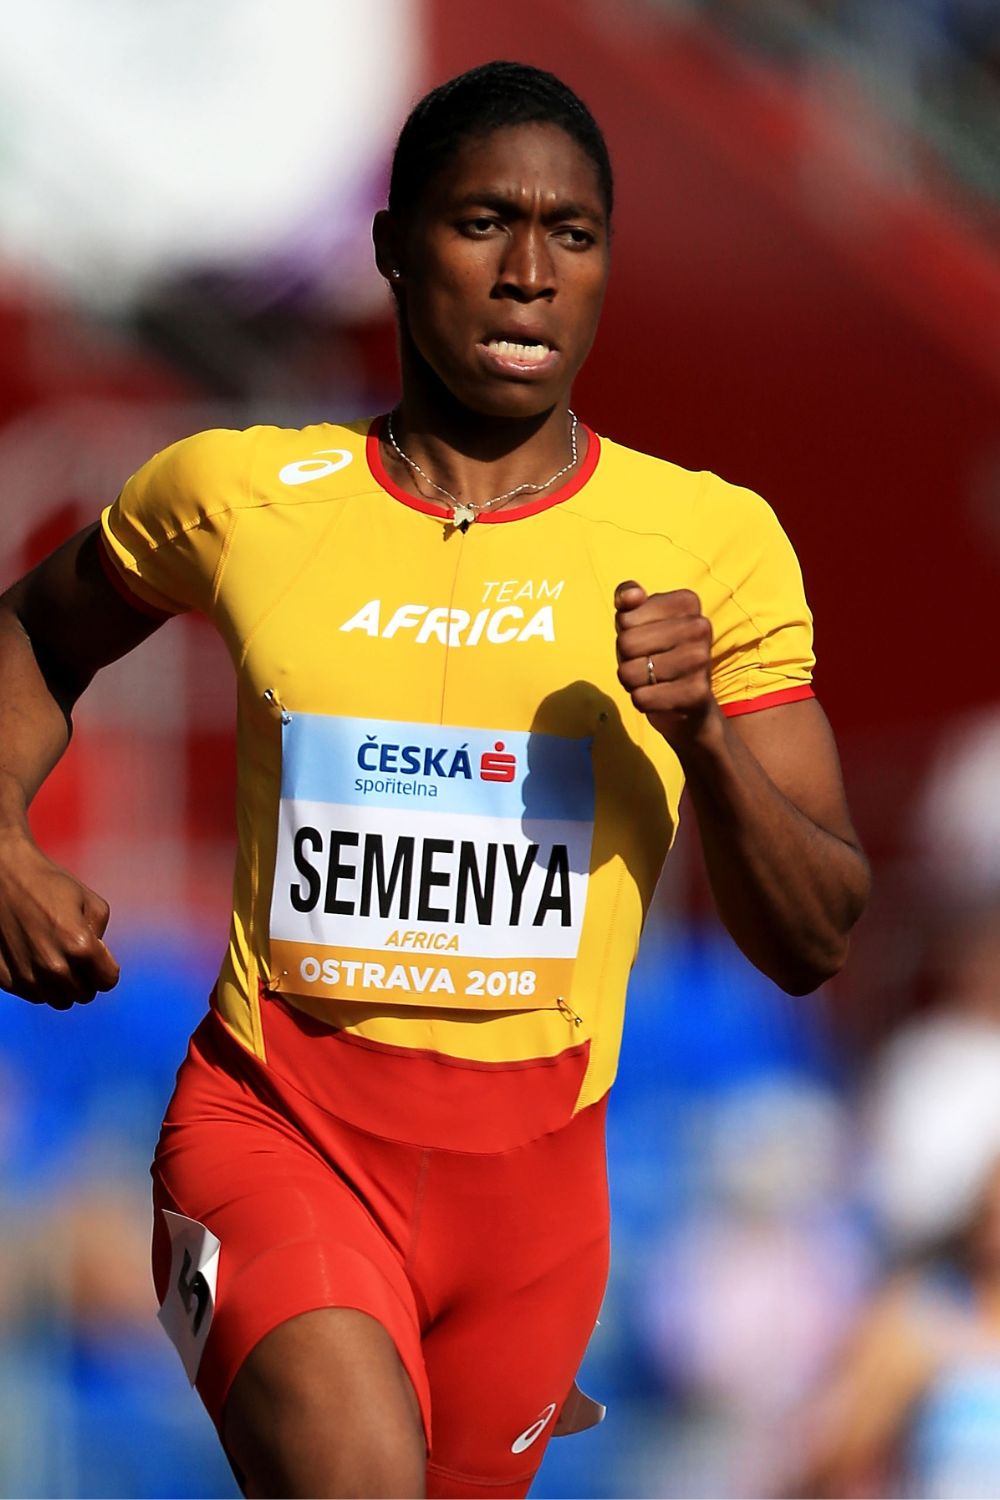 Caster Semenya Winning The 800 m Race At The 2017 World Championship (Source: Sports Business Journal)